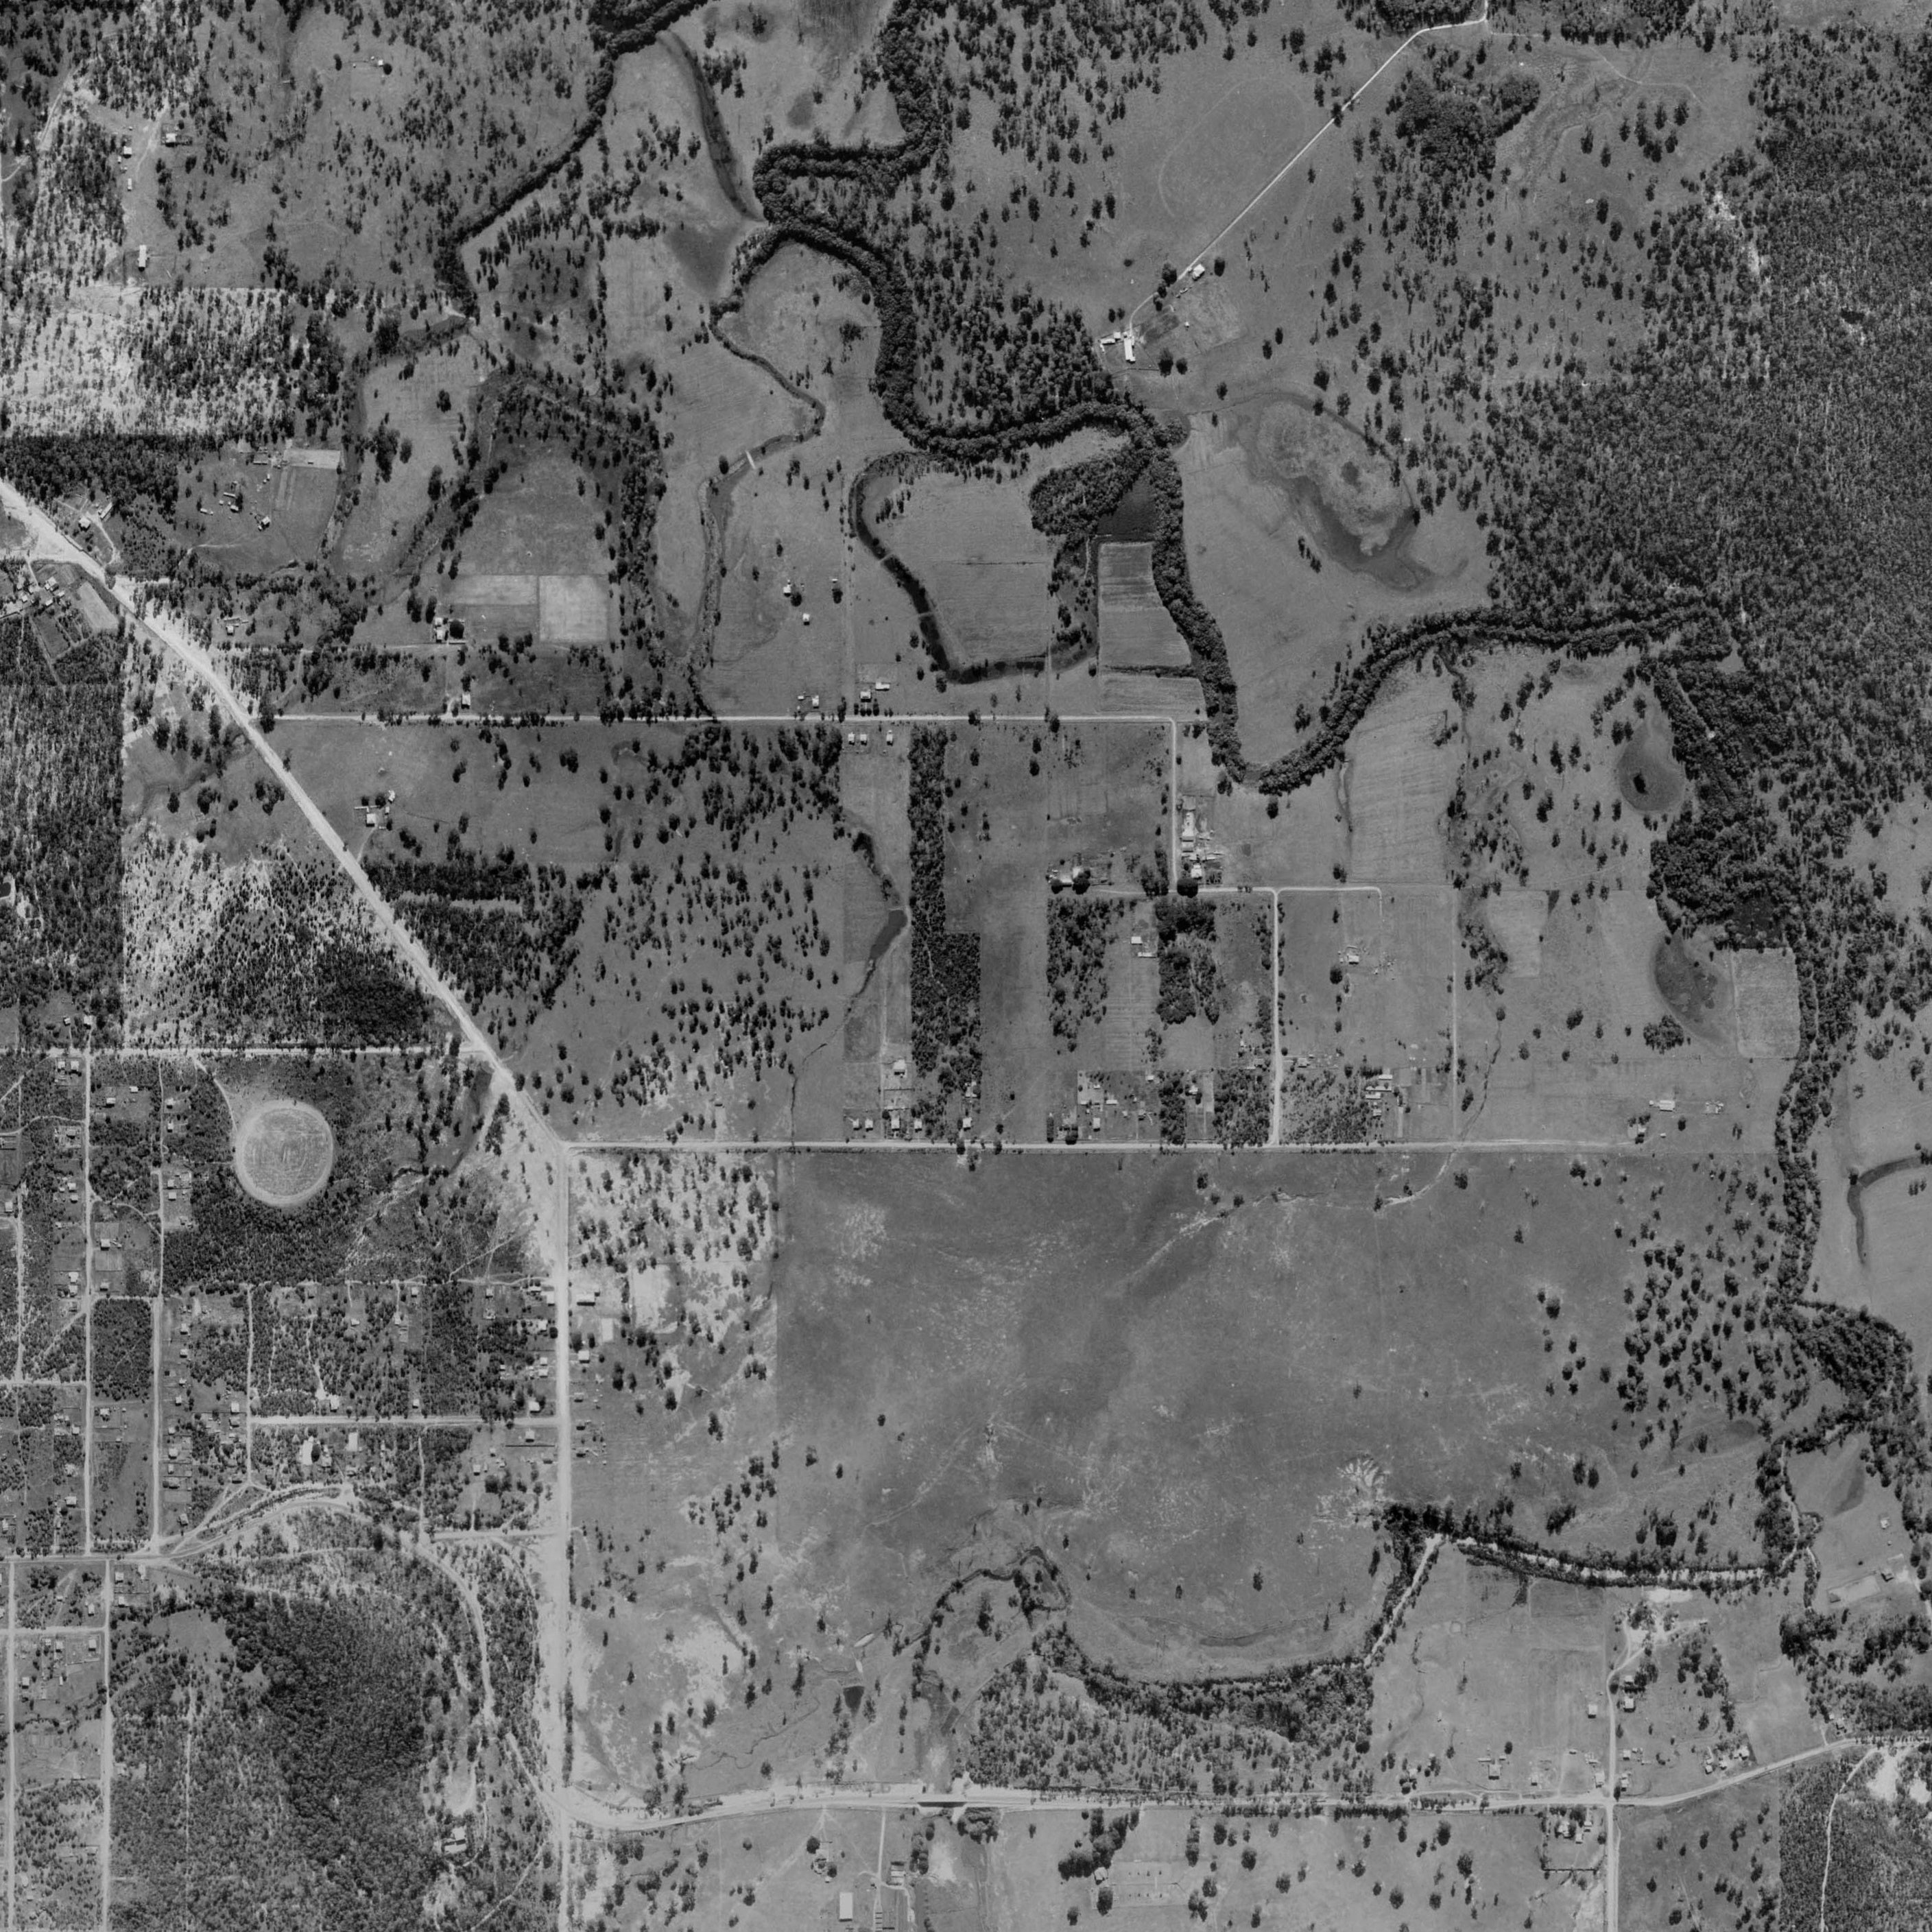 1946 Carina - Aerial Photo - Creek Road